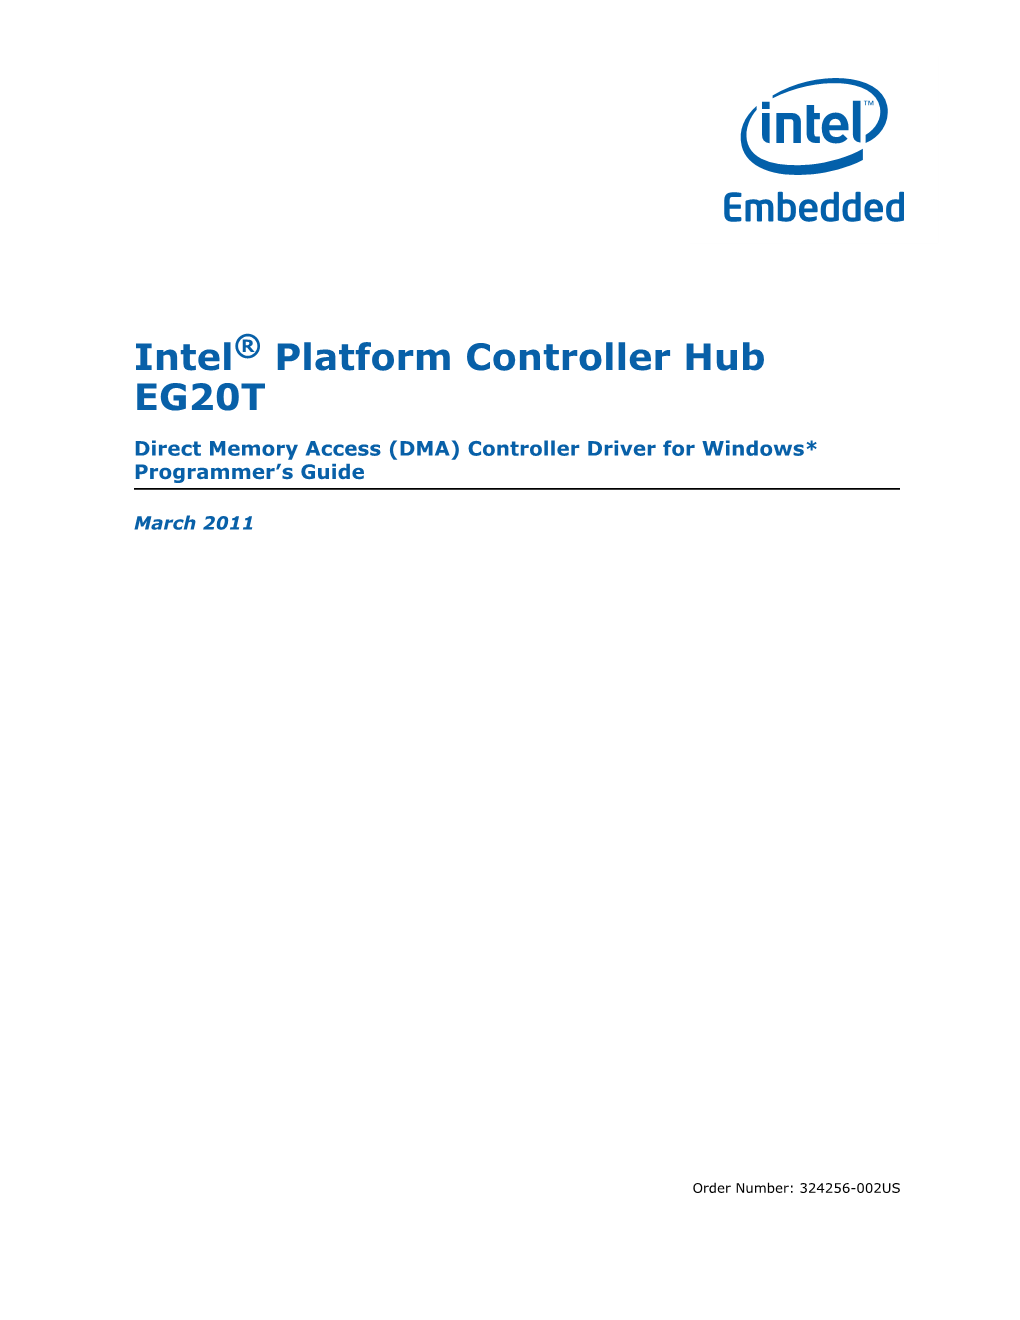 Intel(R) Platform Controller Hub EG20T Direct Memory Access